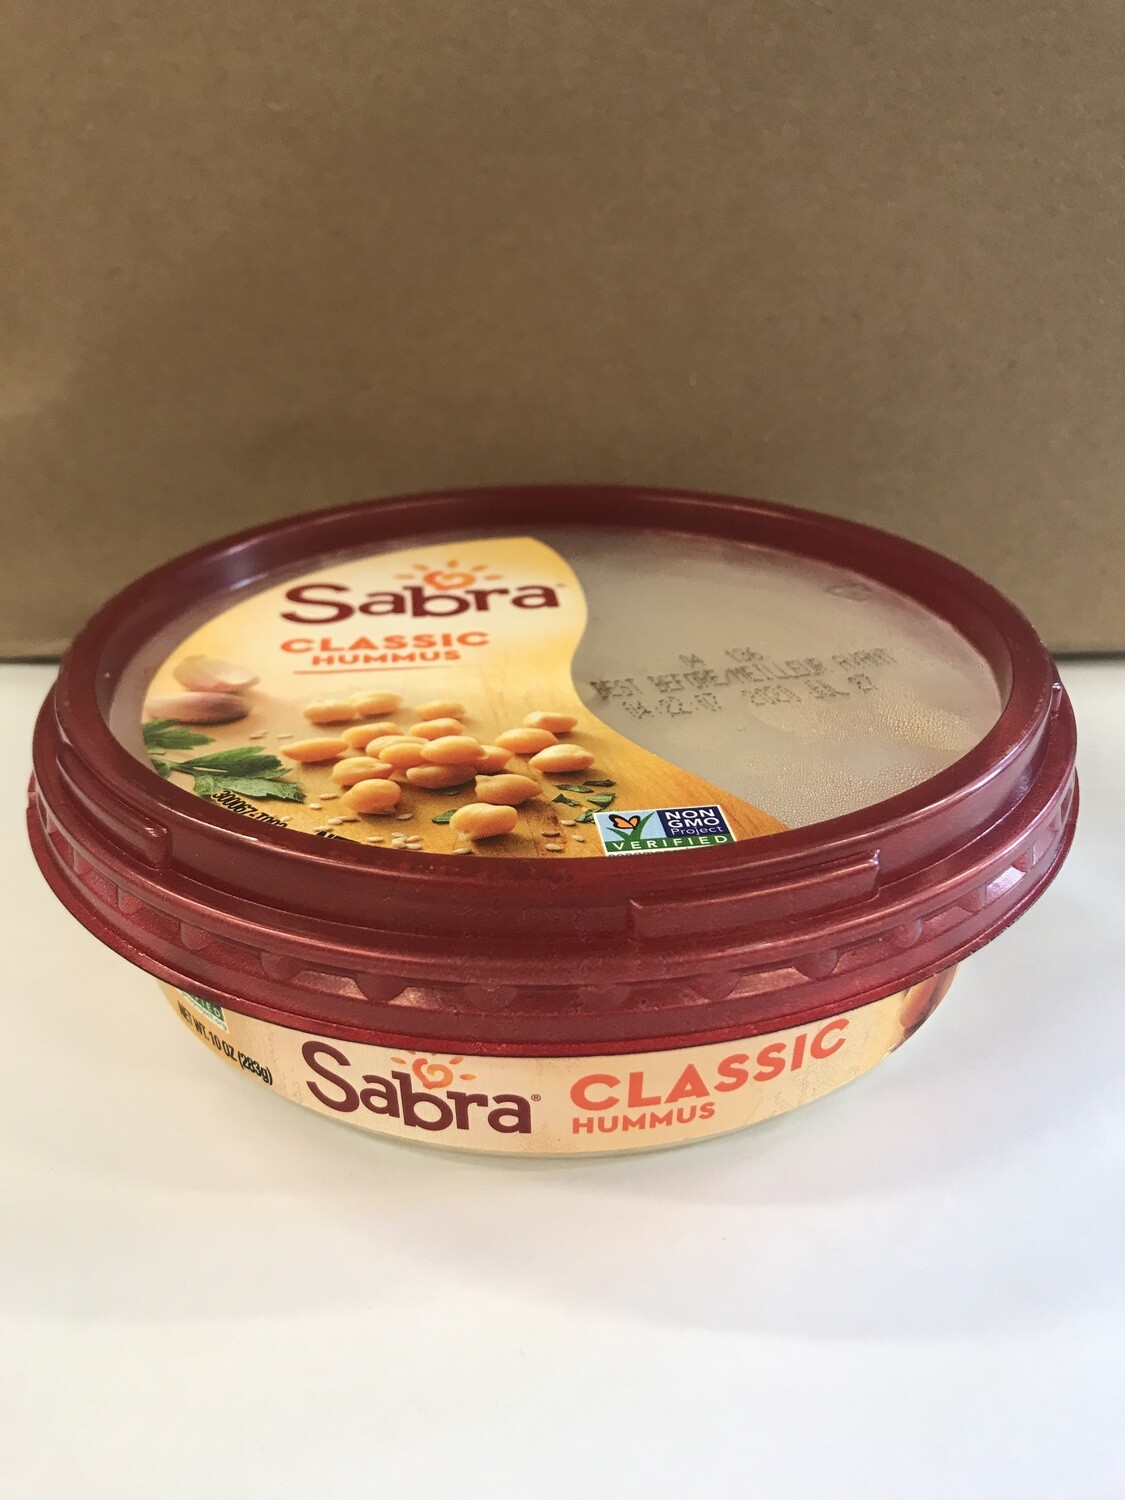 Deli / Hummus / Sabra Hummus Classic